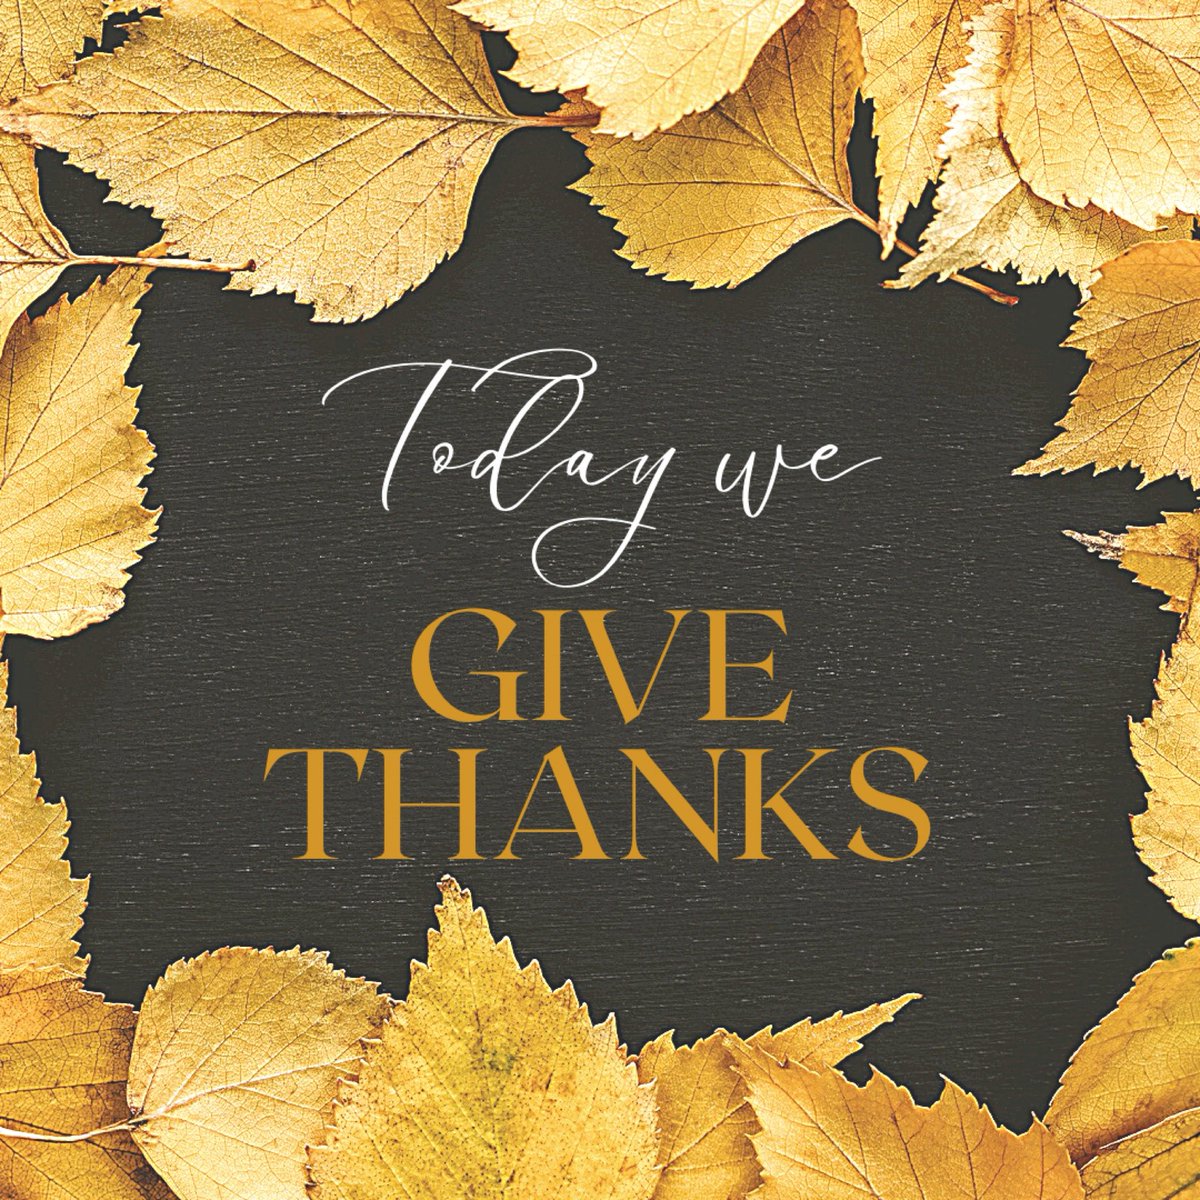 Today we give thanks. 
Today we are grateful for you.
.
.
.
.
.
#thanksgiving #thanksgiving2021 #sanfrancisco #sfrealtor #sanmateo #sanmateorealtor #burlingame #burlingamerealtor #hillsborough #hillsboroughrealtor #sanbruno #sanbrunorealtor #millbrae #millbraerealtor